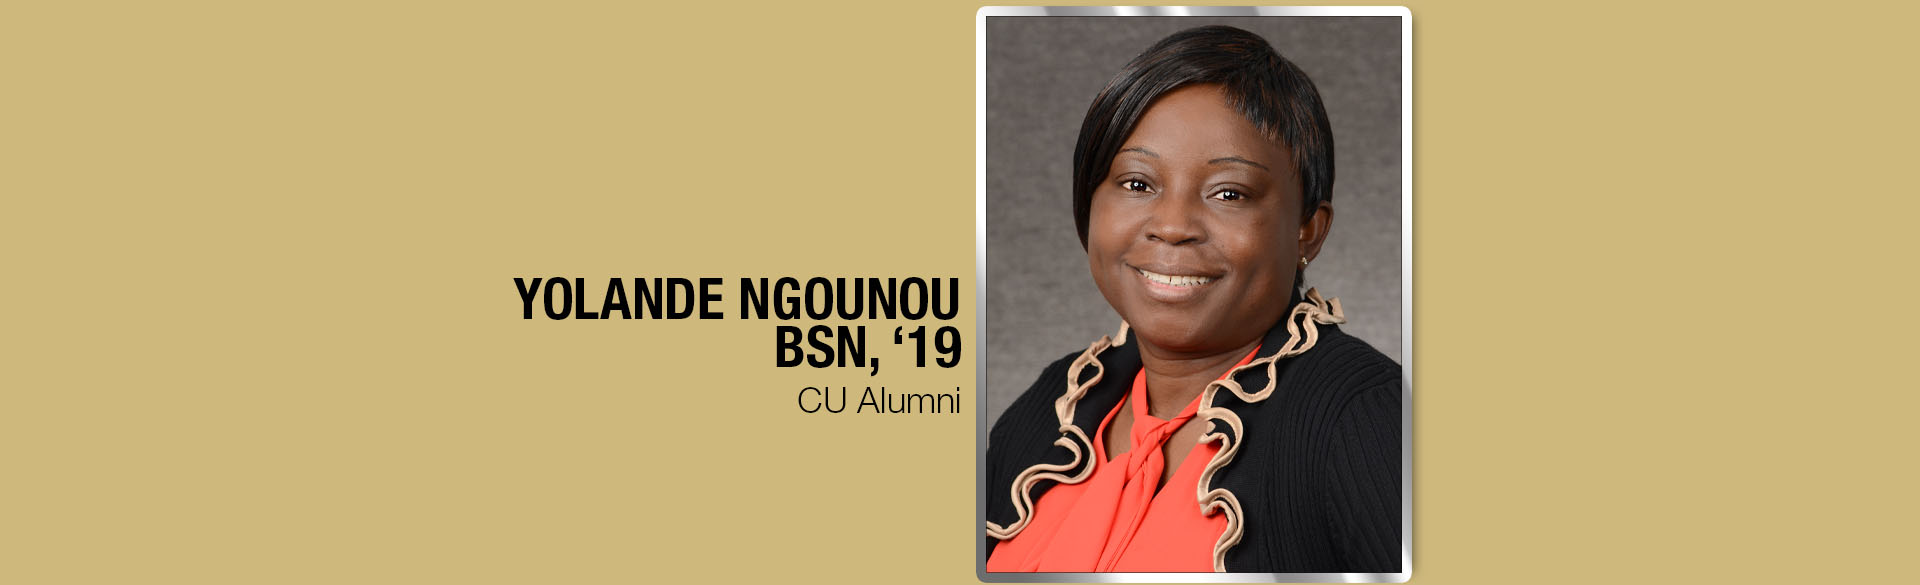 CU Alumni Yolande Ngounou, BSN ’19